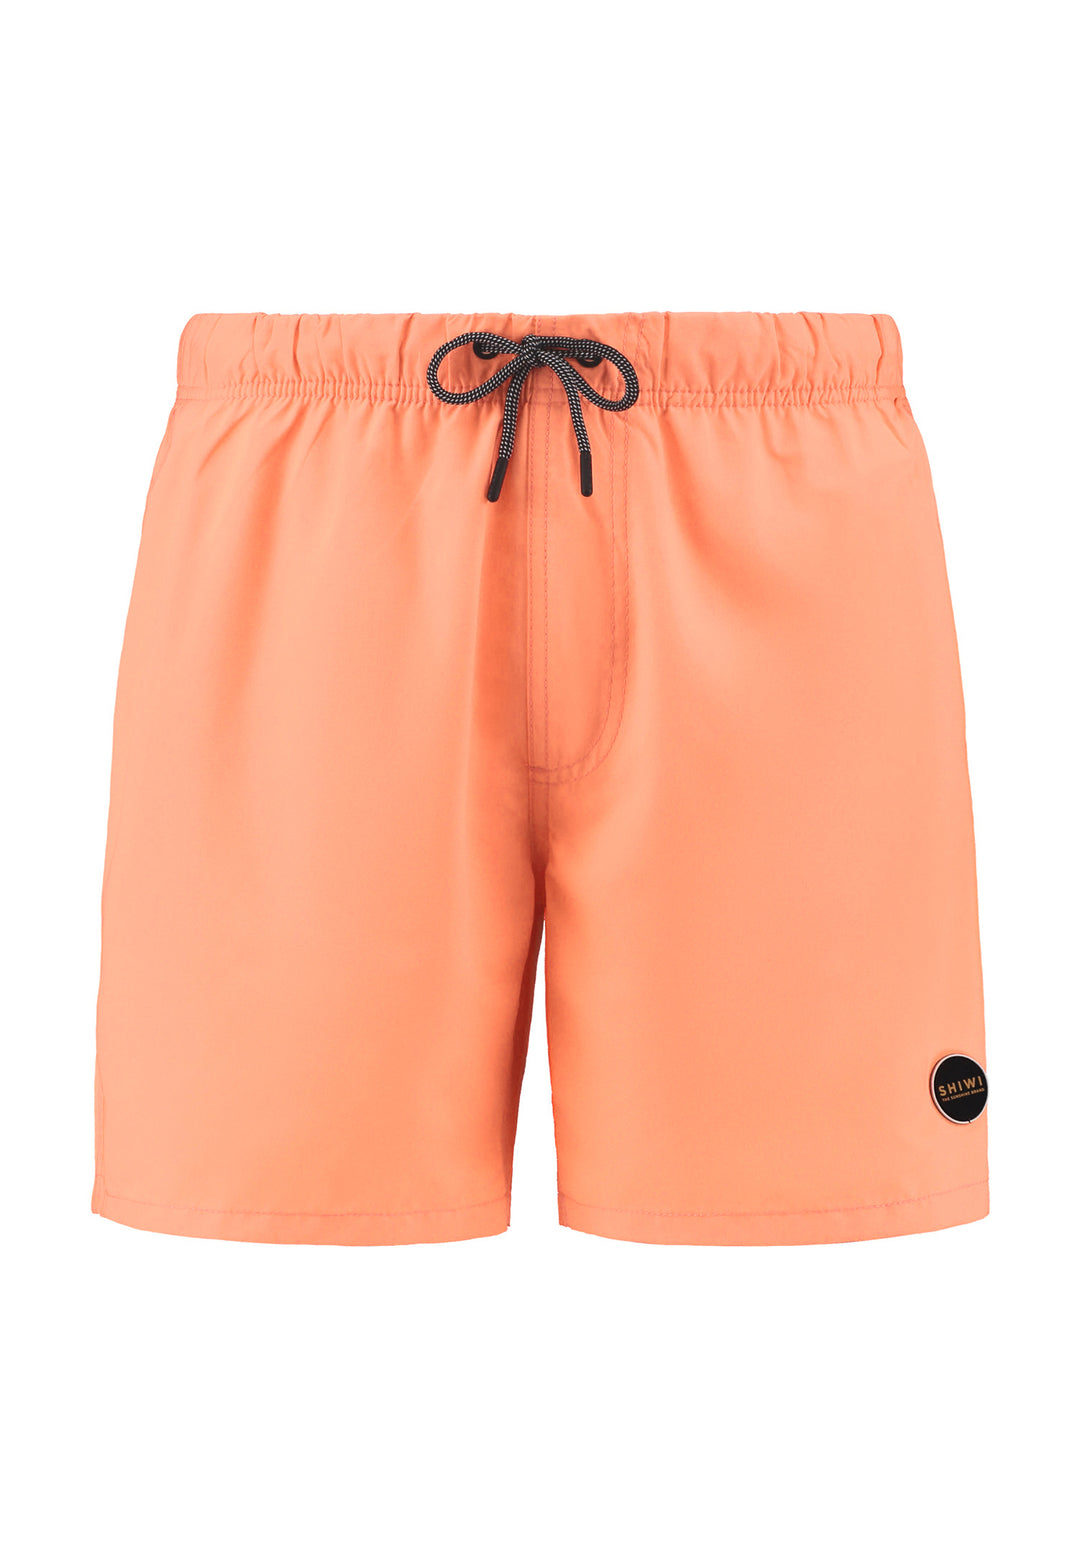 Shiwi Neon Orange Zwemshort Adult Mike met rekbare tailleband